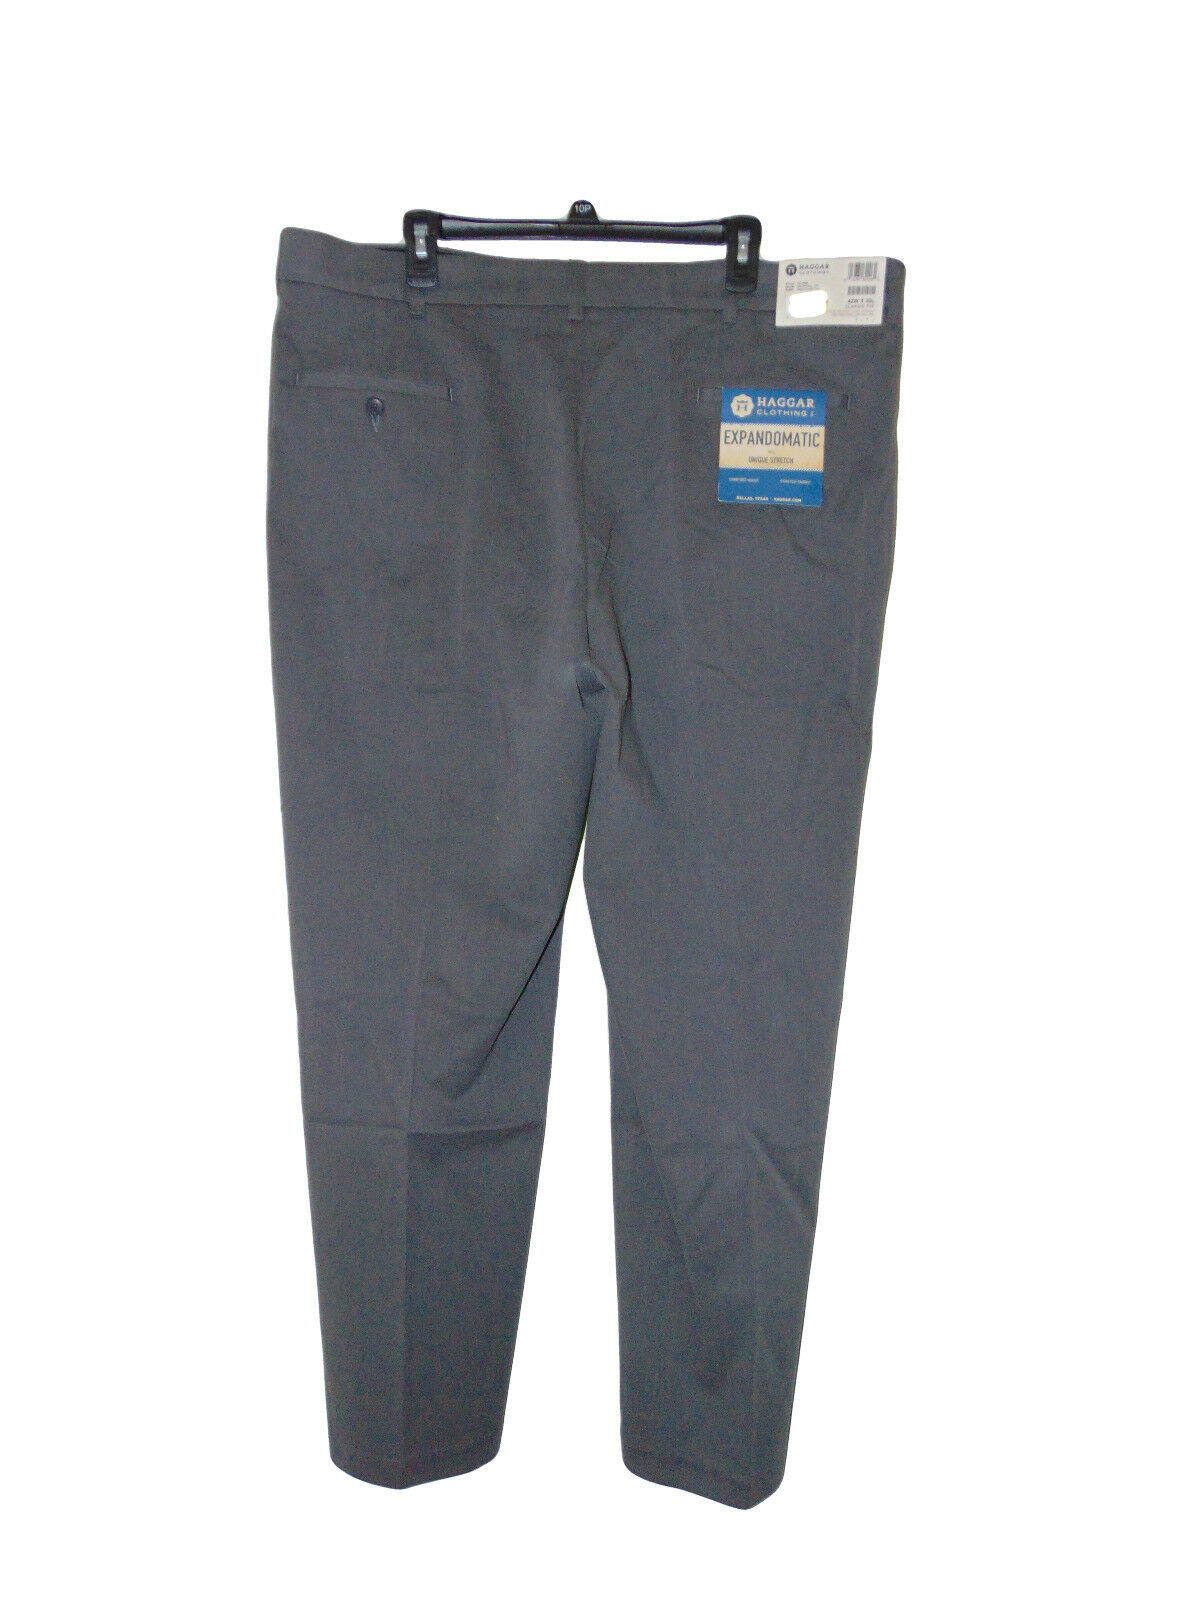 Haggar Expandomatic Gray Pants 42 X 30 Men New Classic Fit - Pants